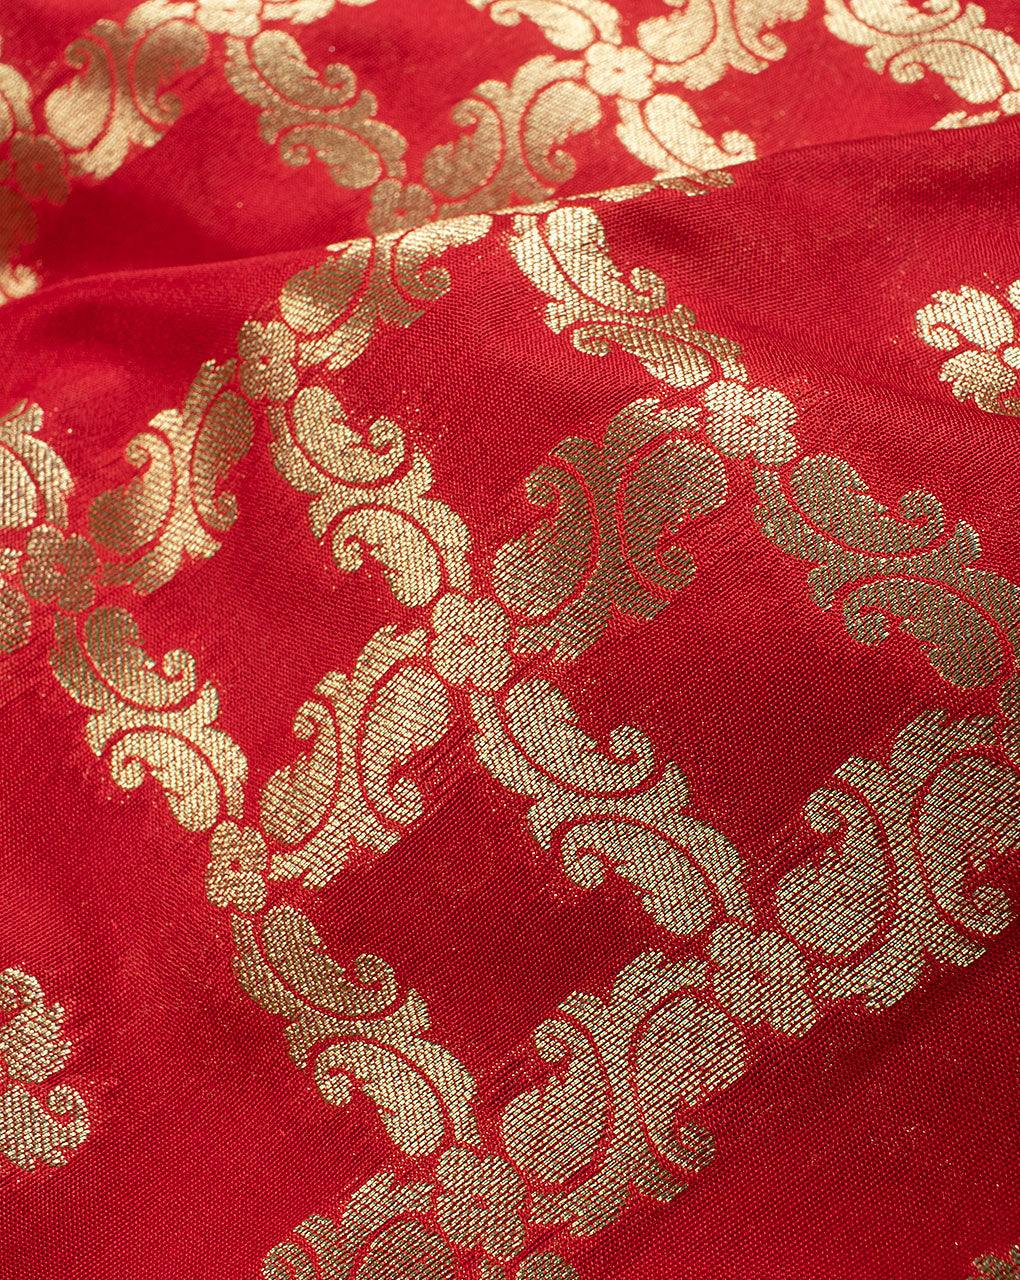 Red Gold Traditional Pattern Zari Jacquard Banarasi Taffeta Silk Fabric - Fabriclore.com